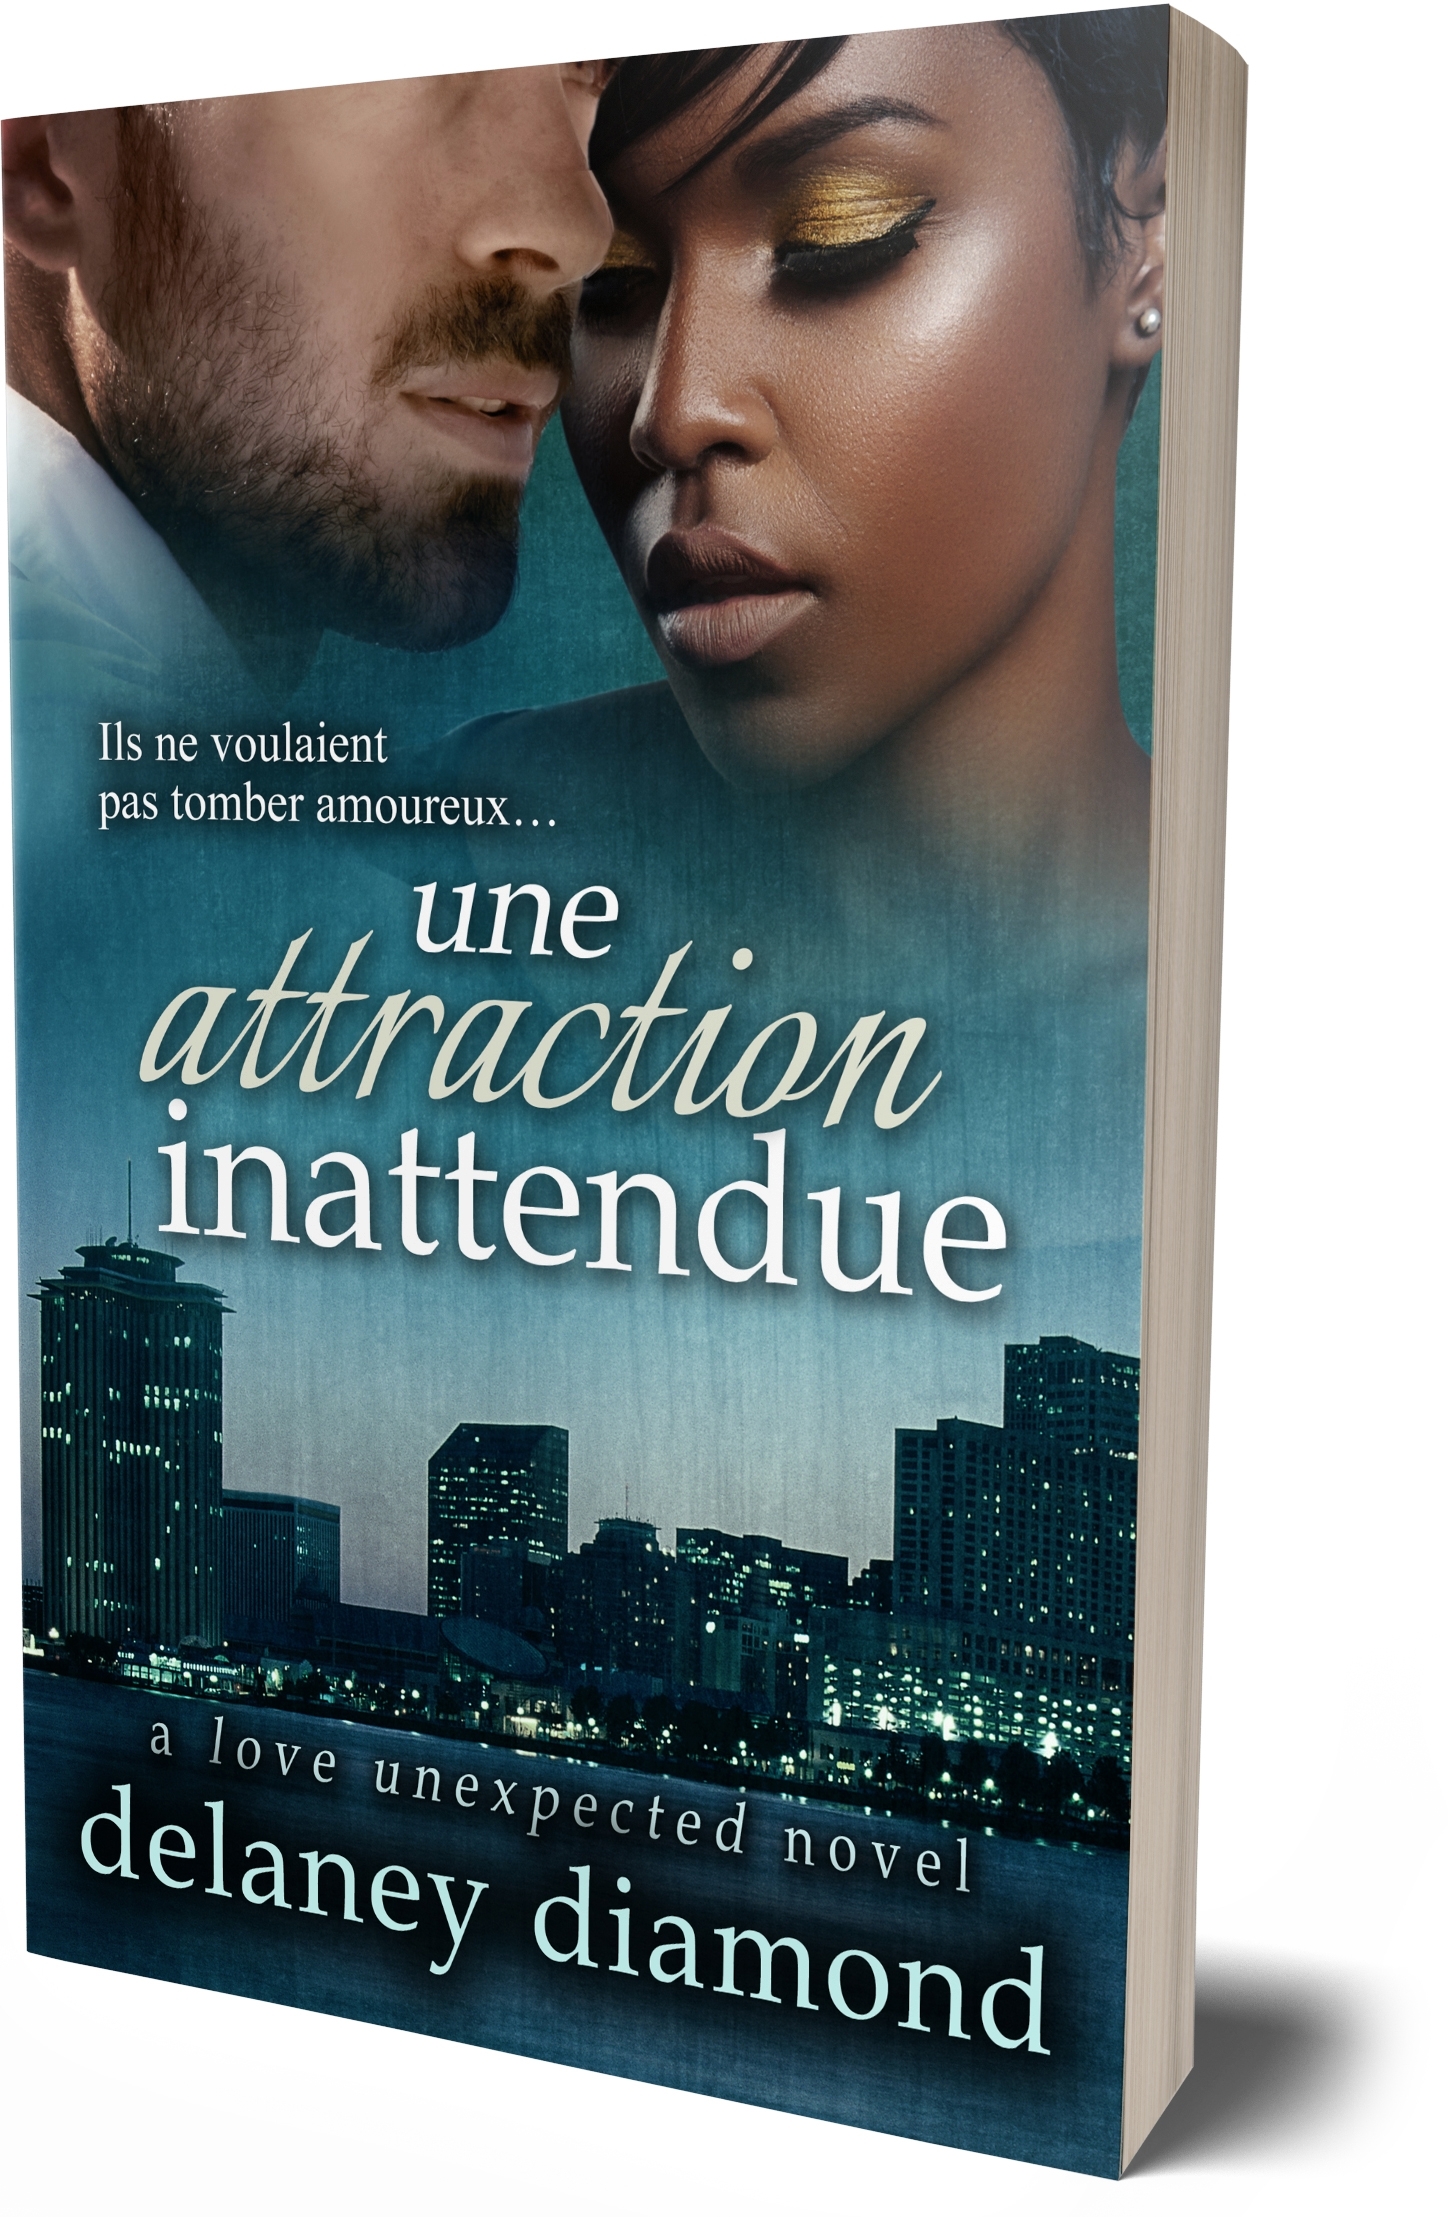 interracial couple on book cover